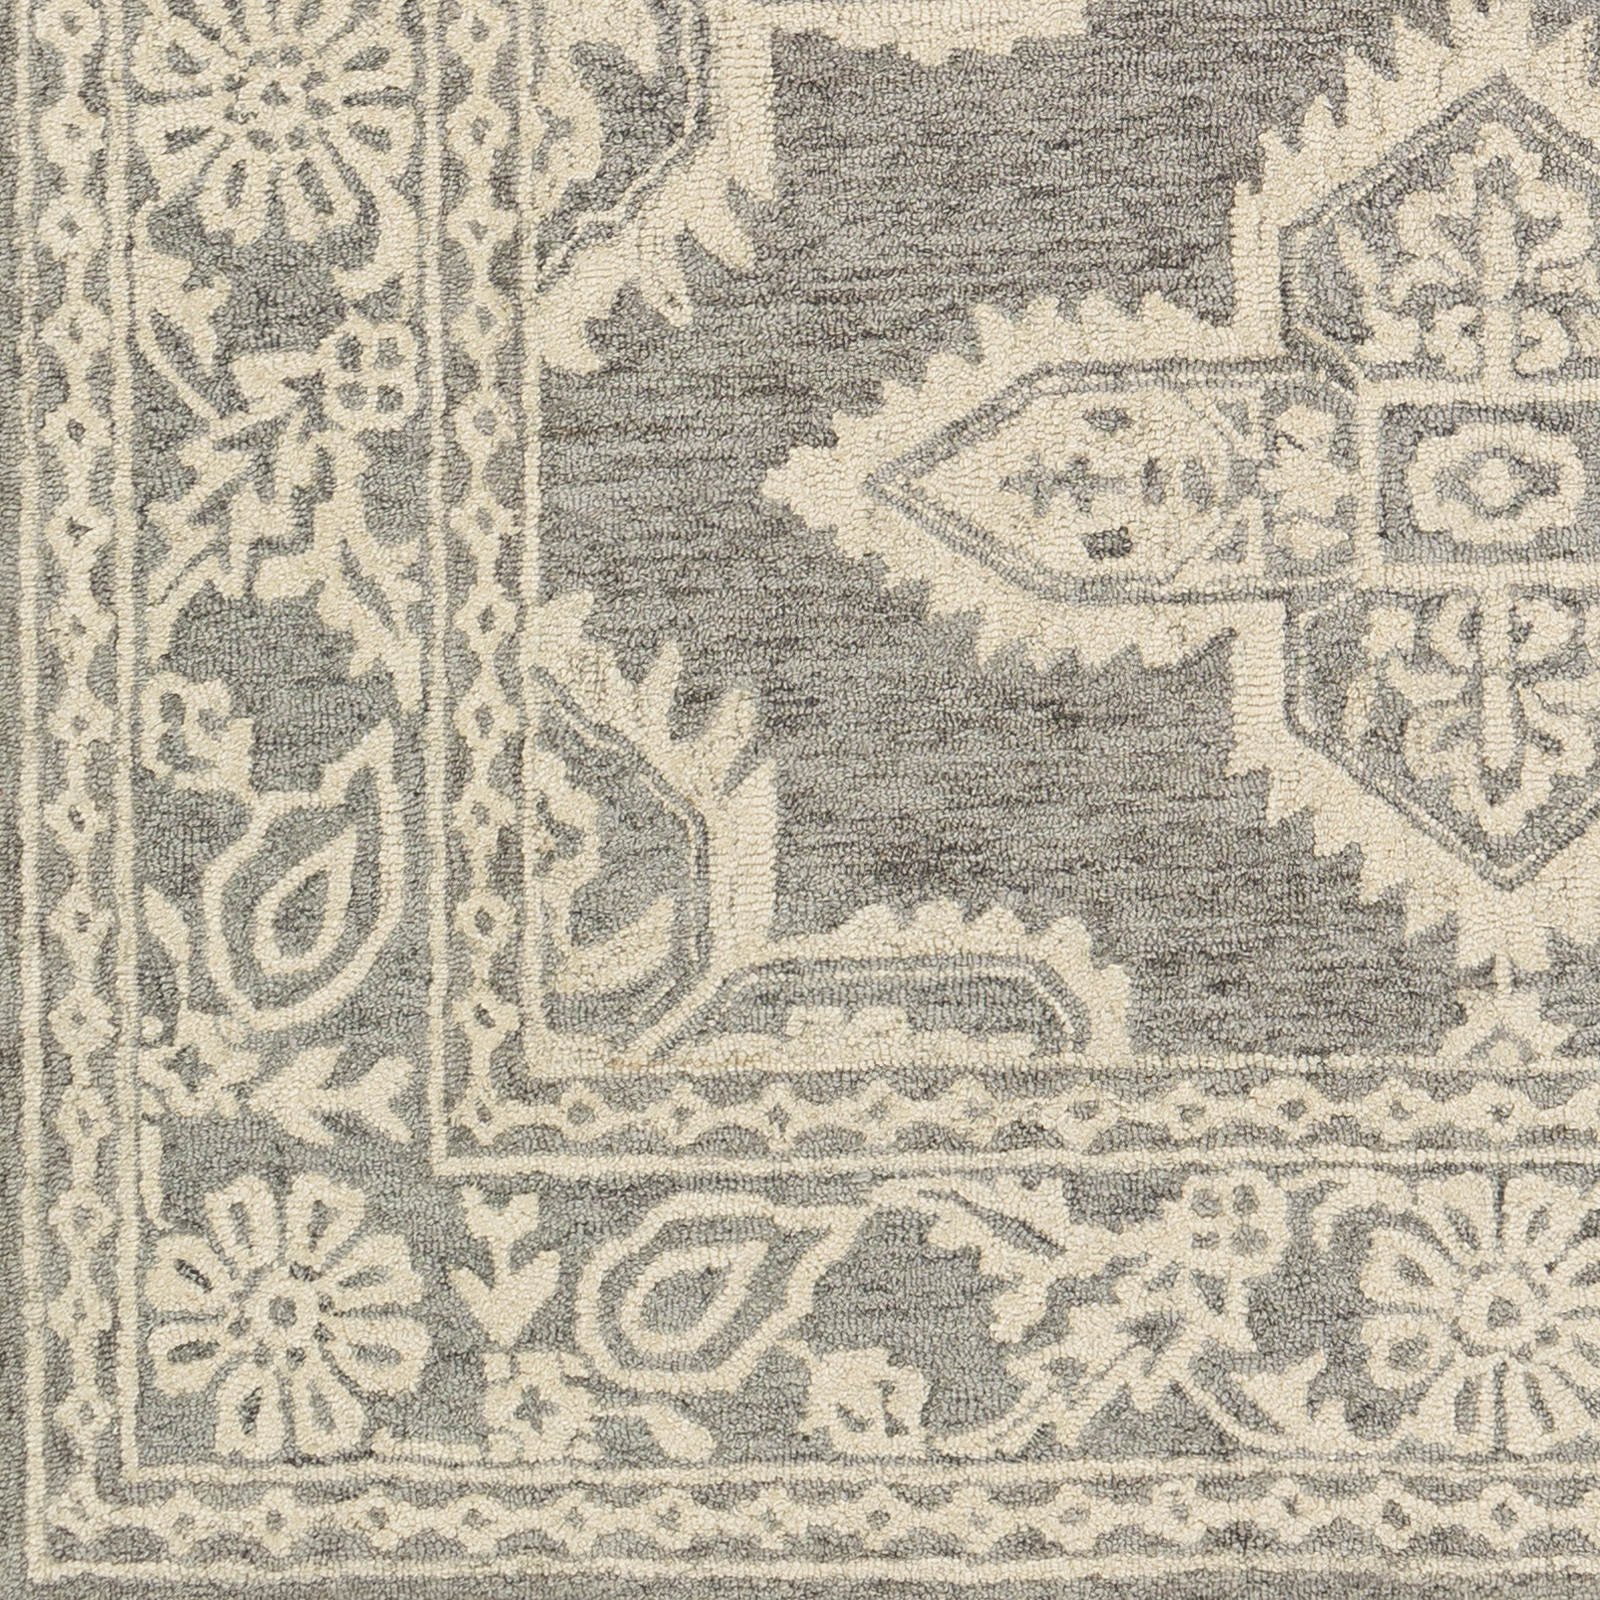 Granada Rug, 9' x 12' - Image 5